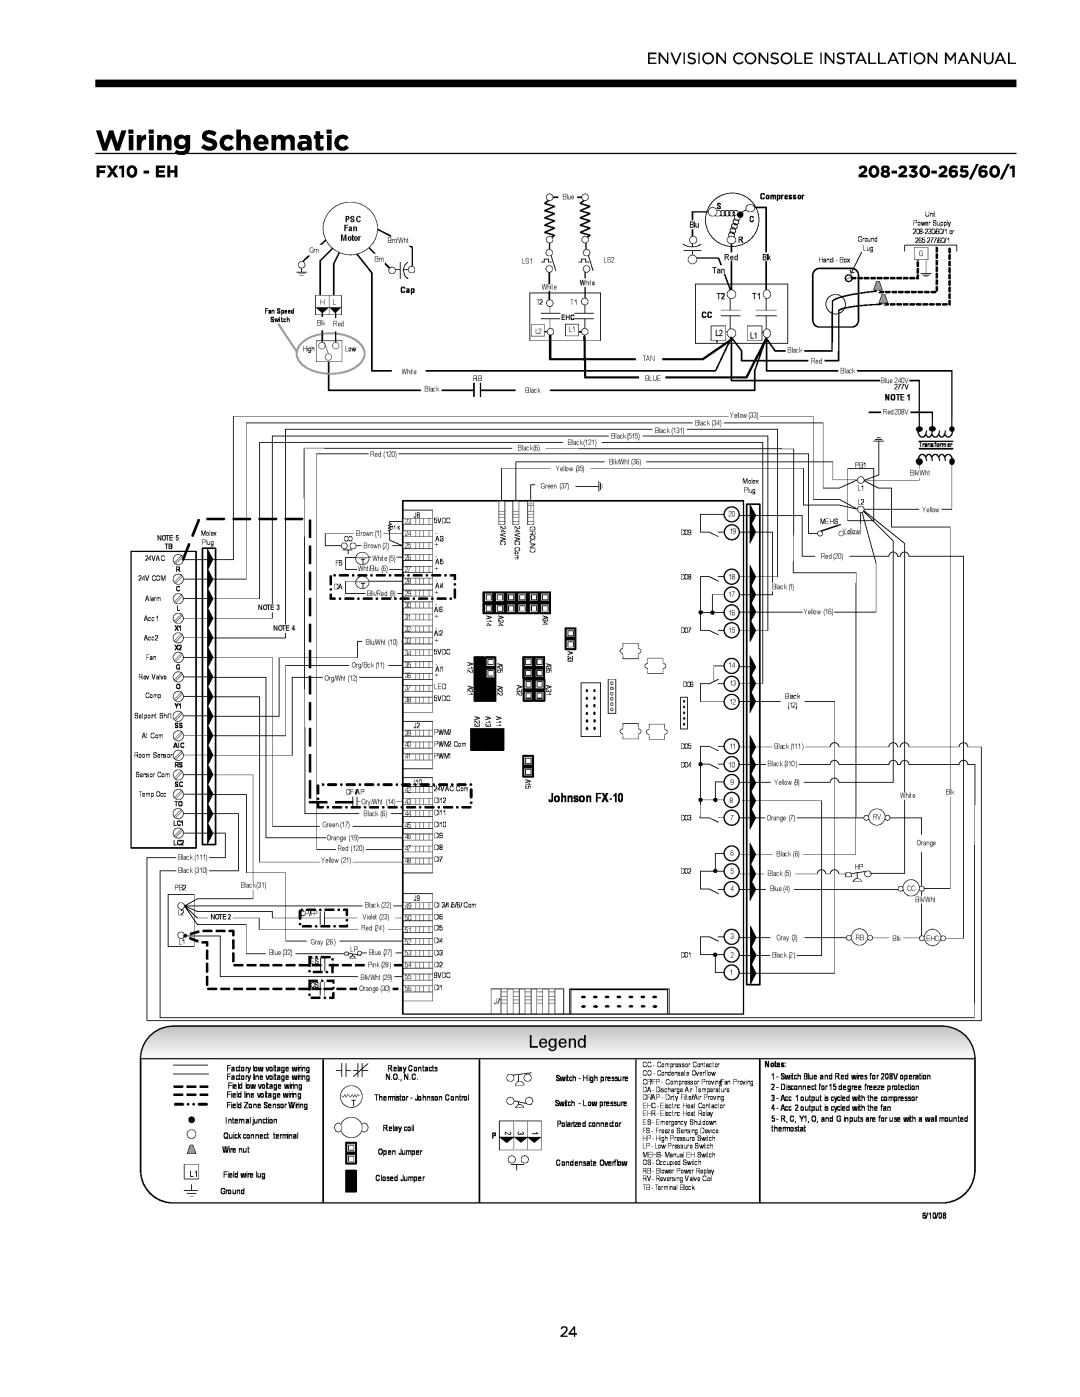 Envision Peripherals IM1609 10, IM1609 08 FX10 - EH, Wiring Schematic, 208-230-265/60/1, PSC Fan, Motor, Compressor 